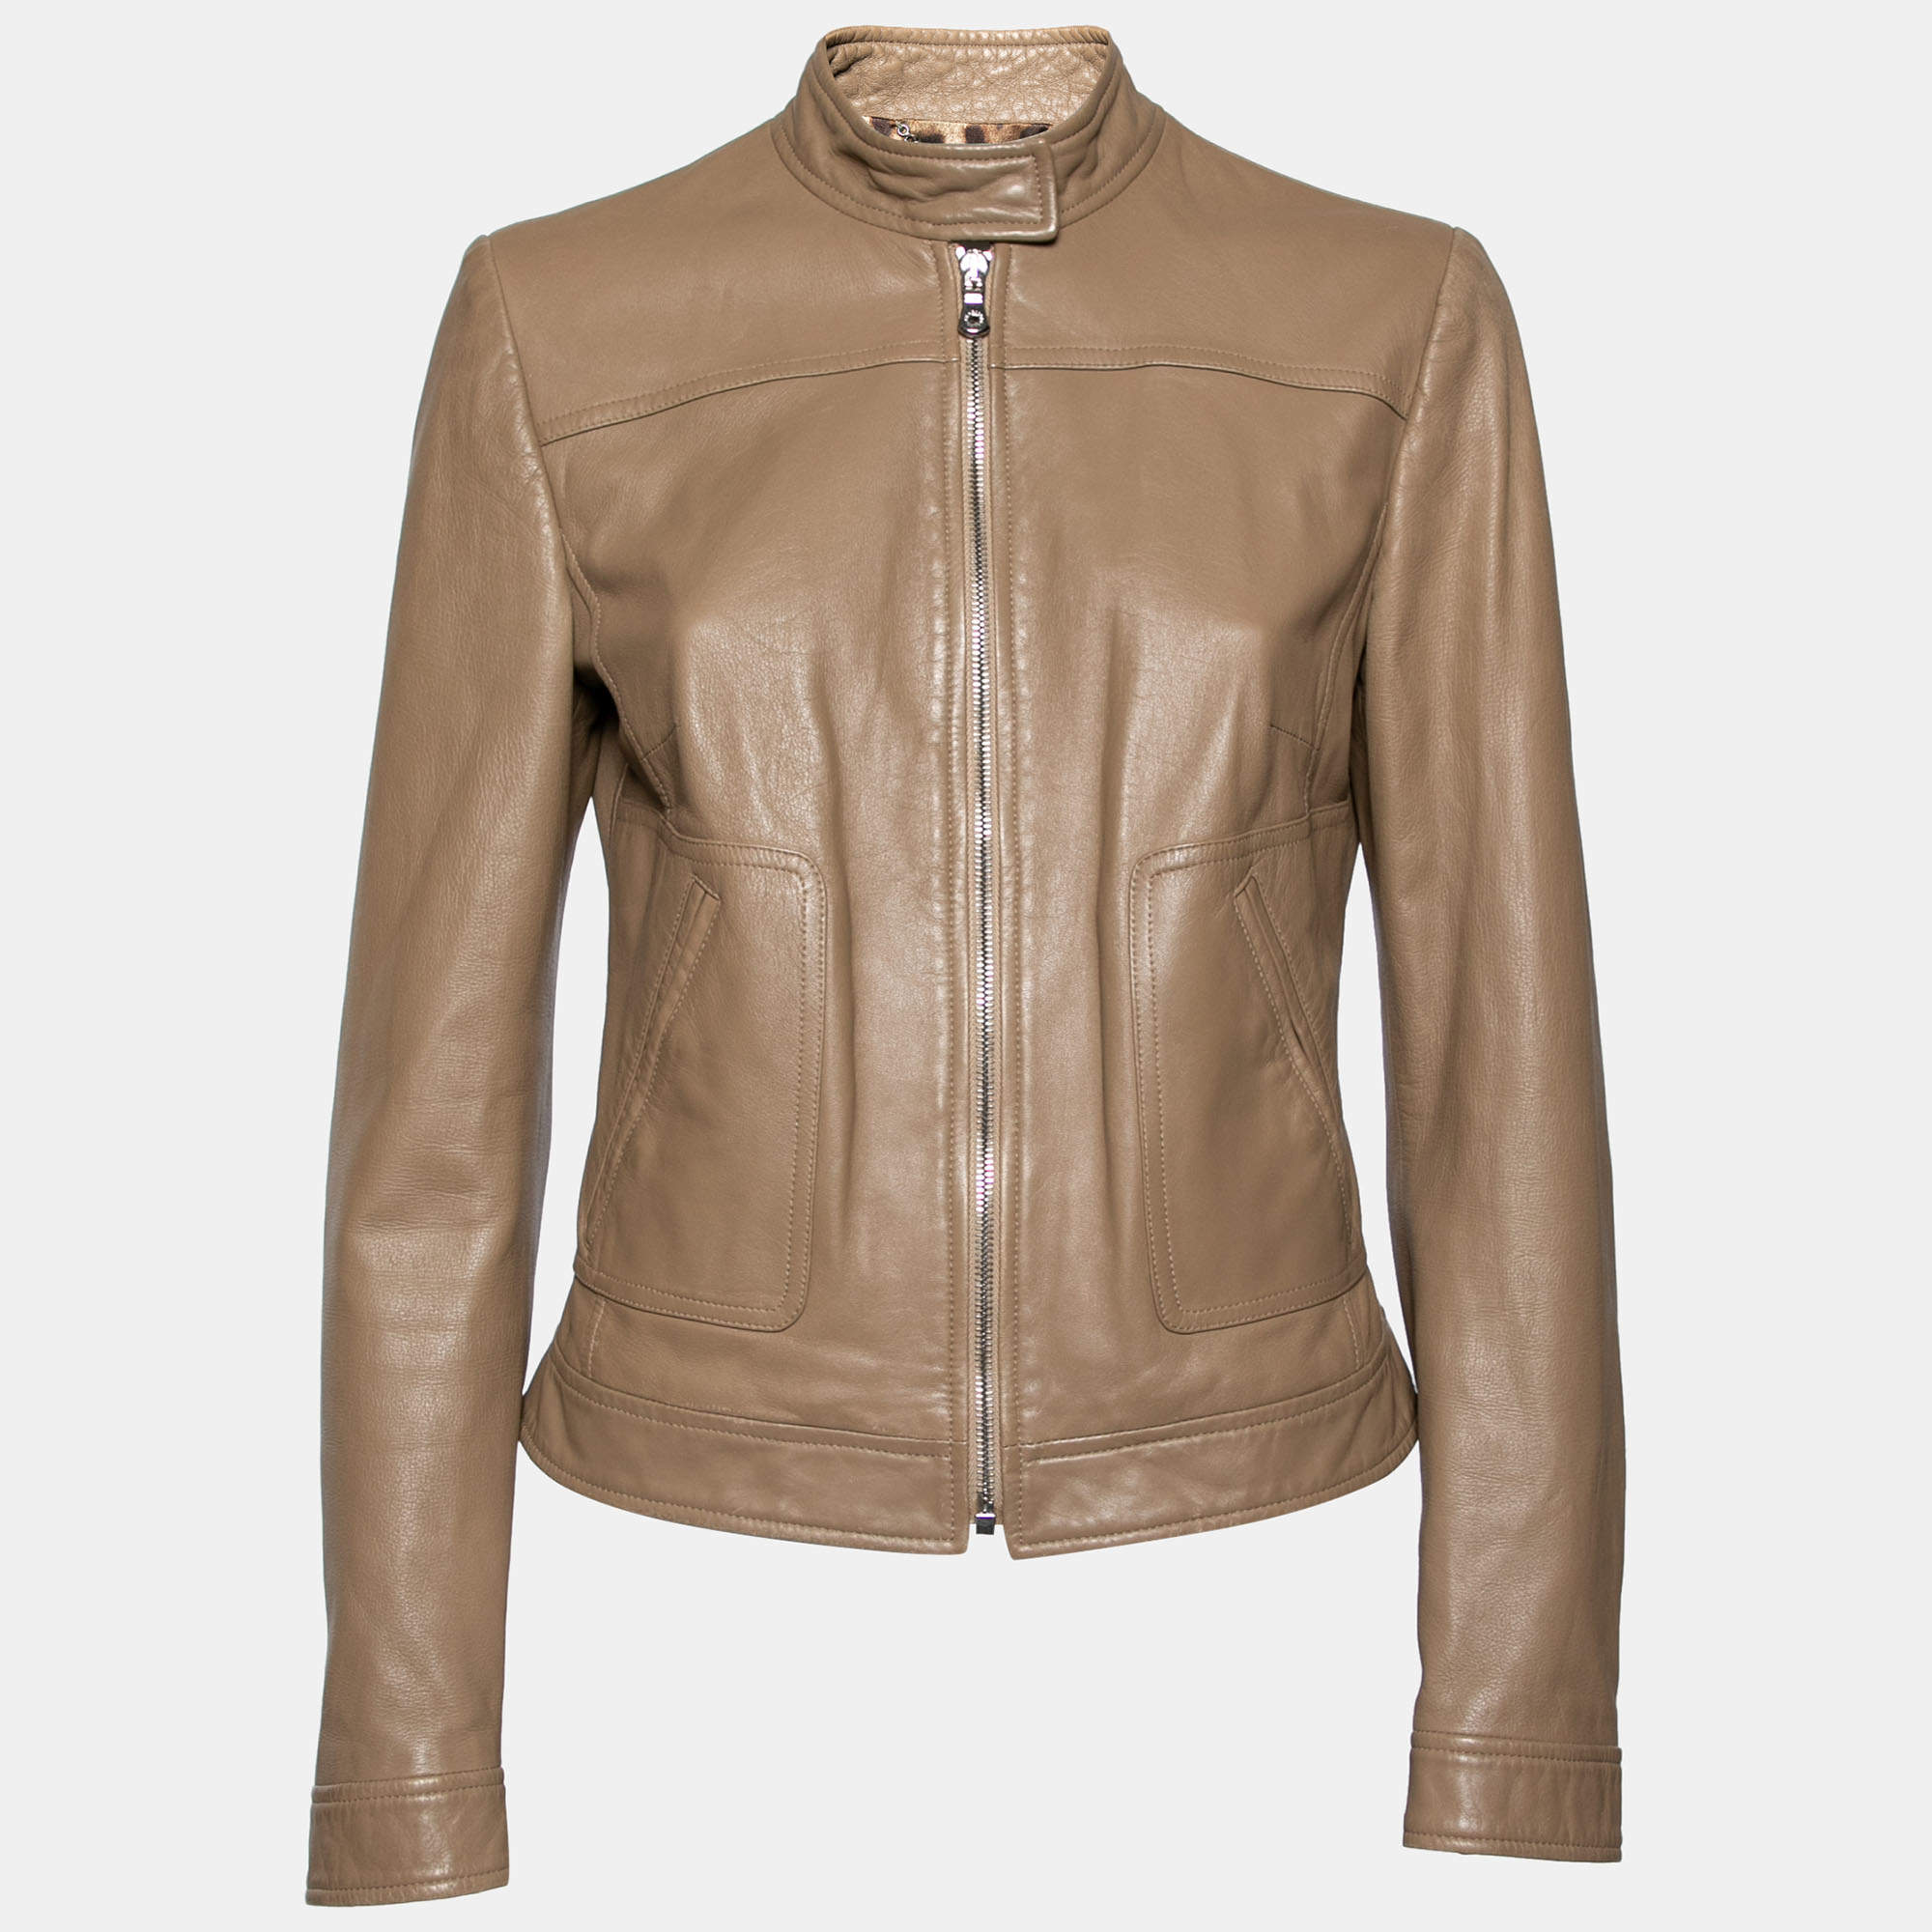 Dolce Gabanna designer leather jackets